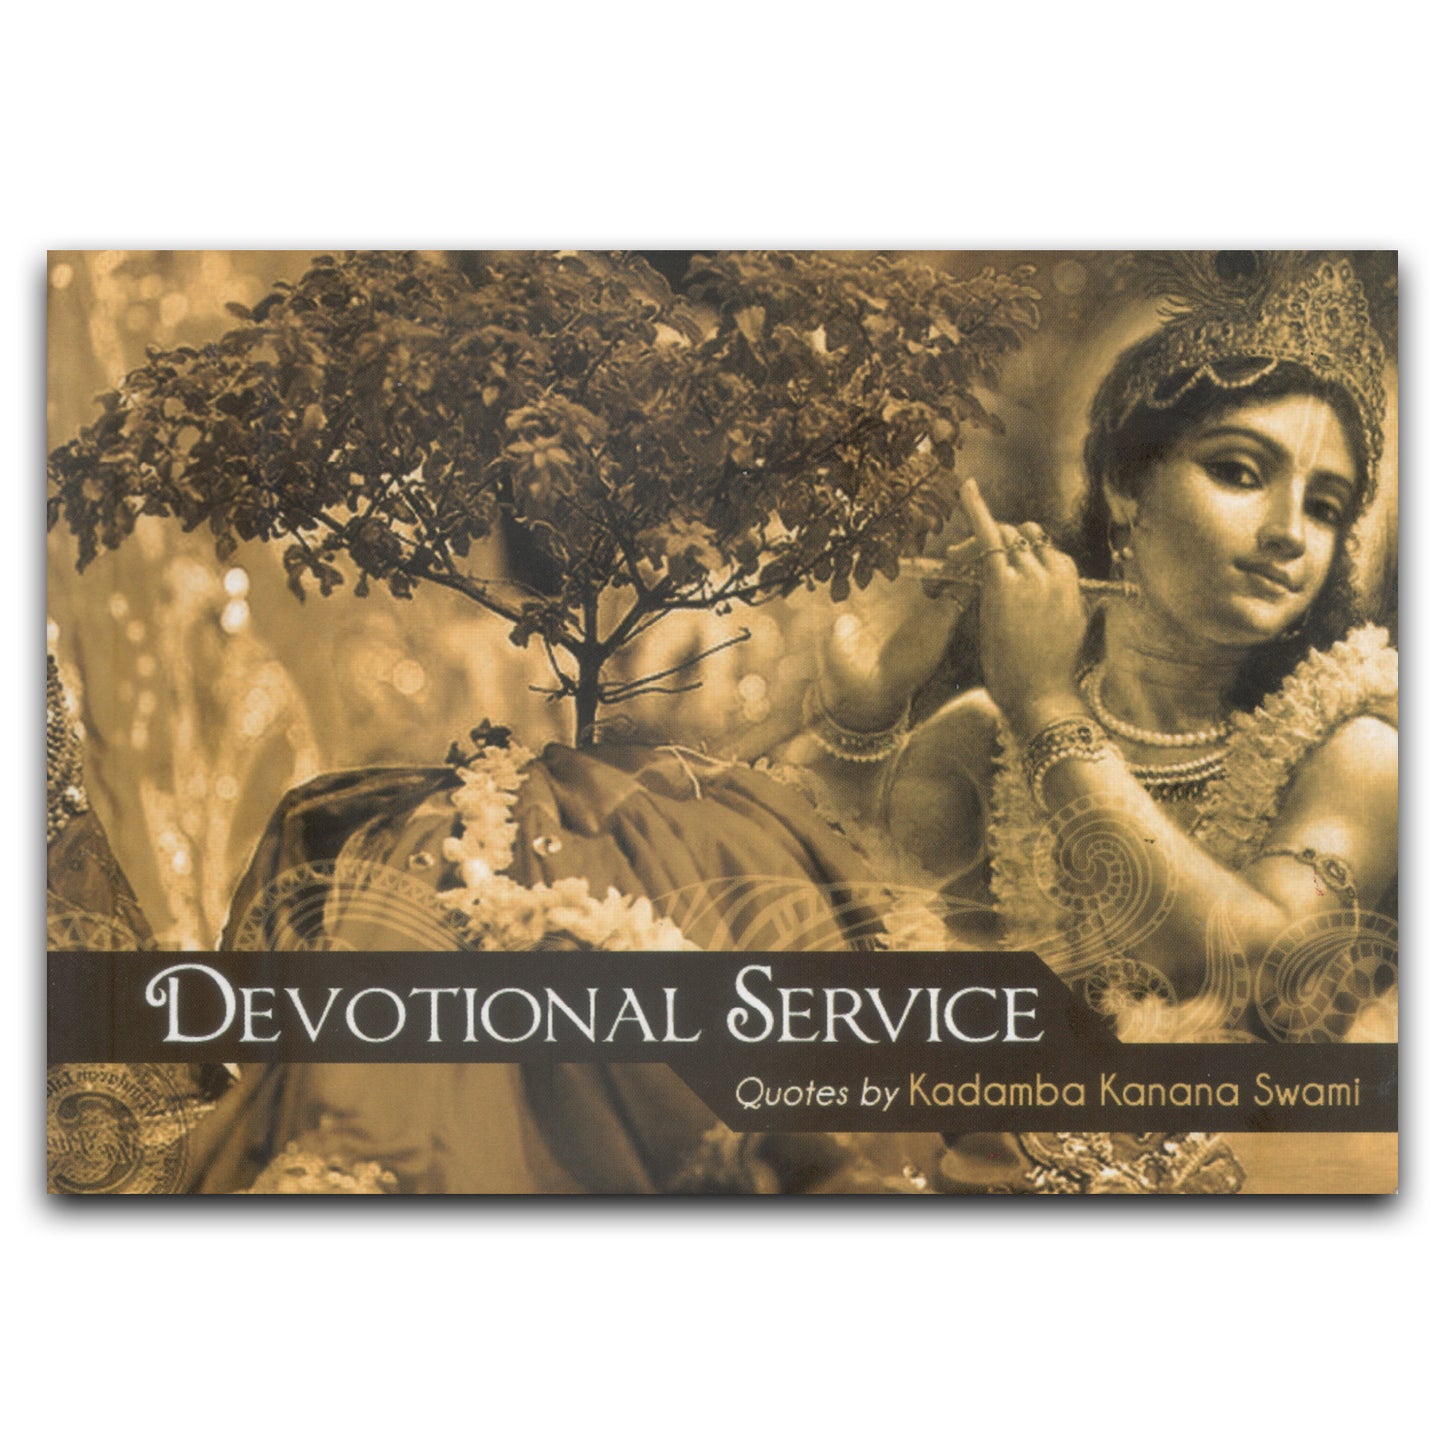 Devotional Service